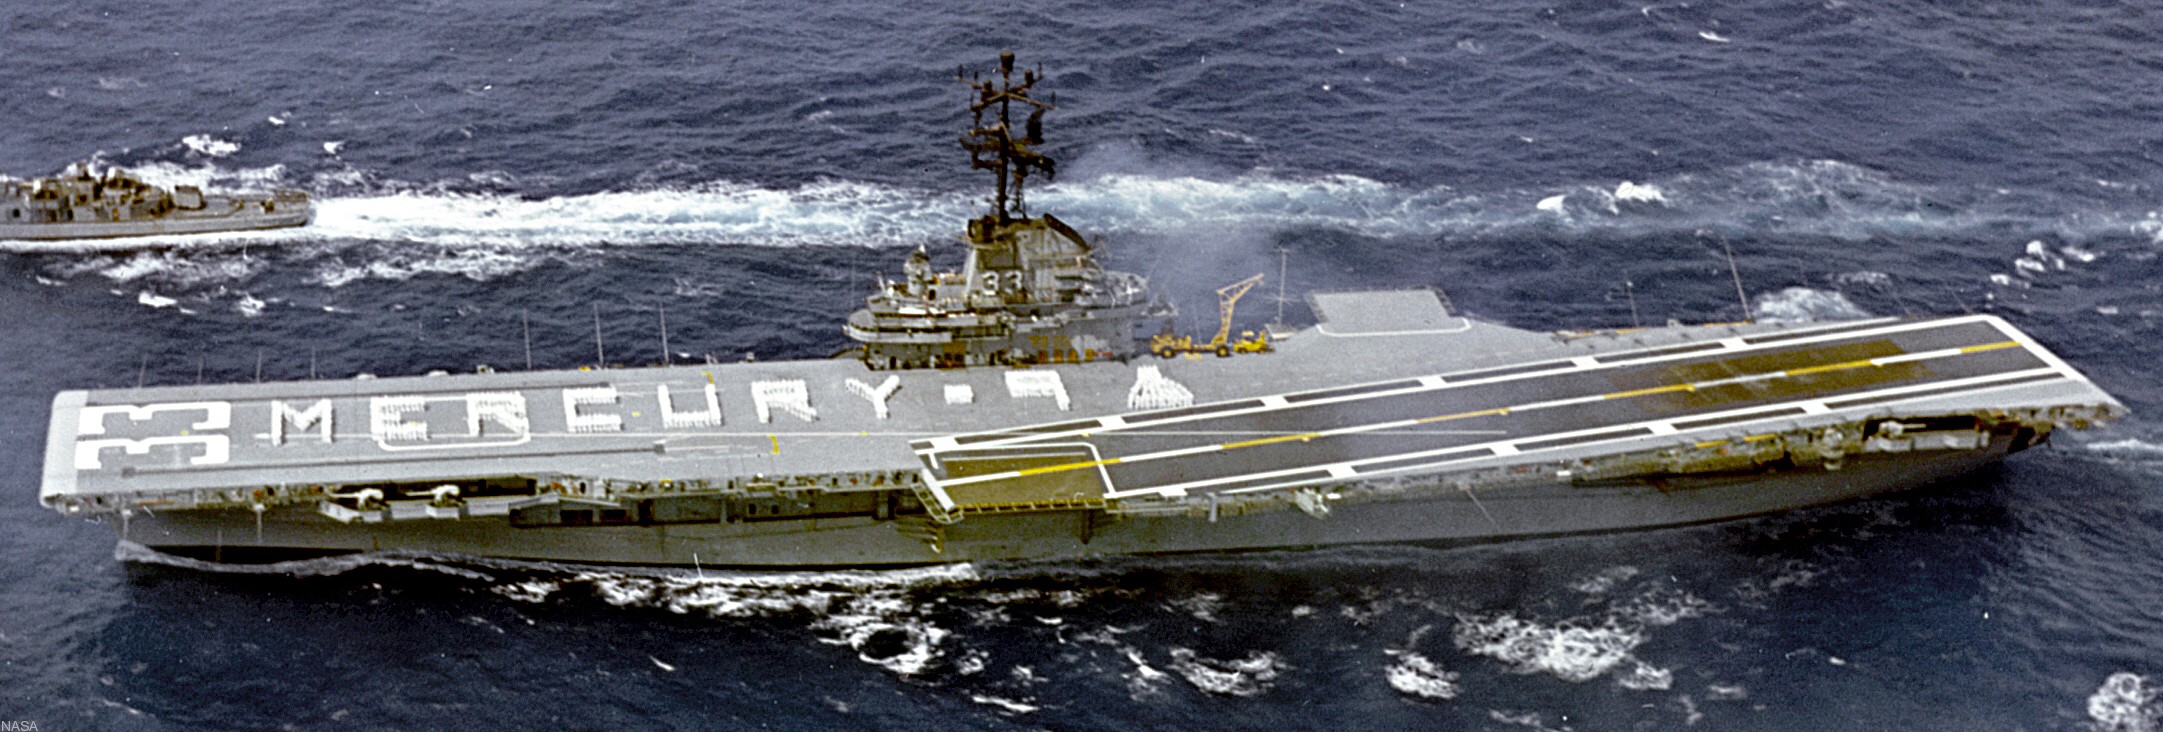 cvs-33 uss kearsarge essex class anti submarine aircraft carrier air group navy cvsg-53 nasa mercury recovery 34